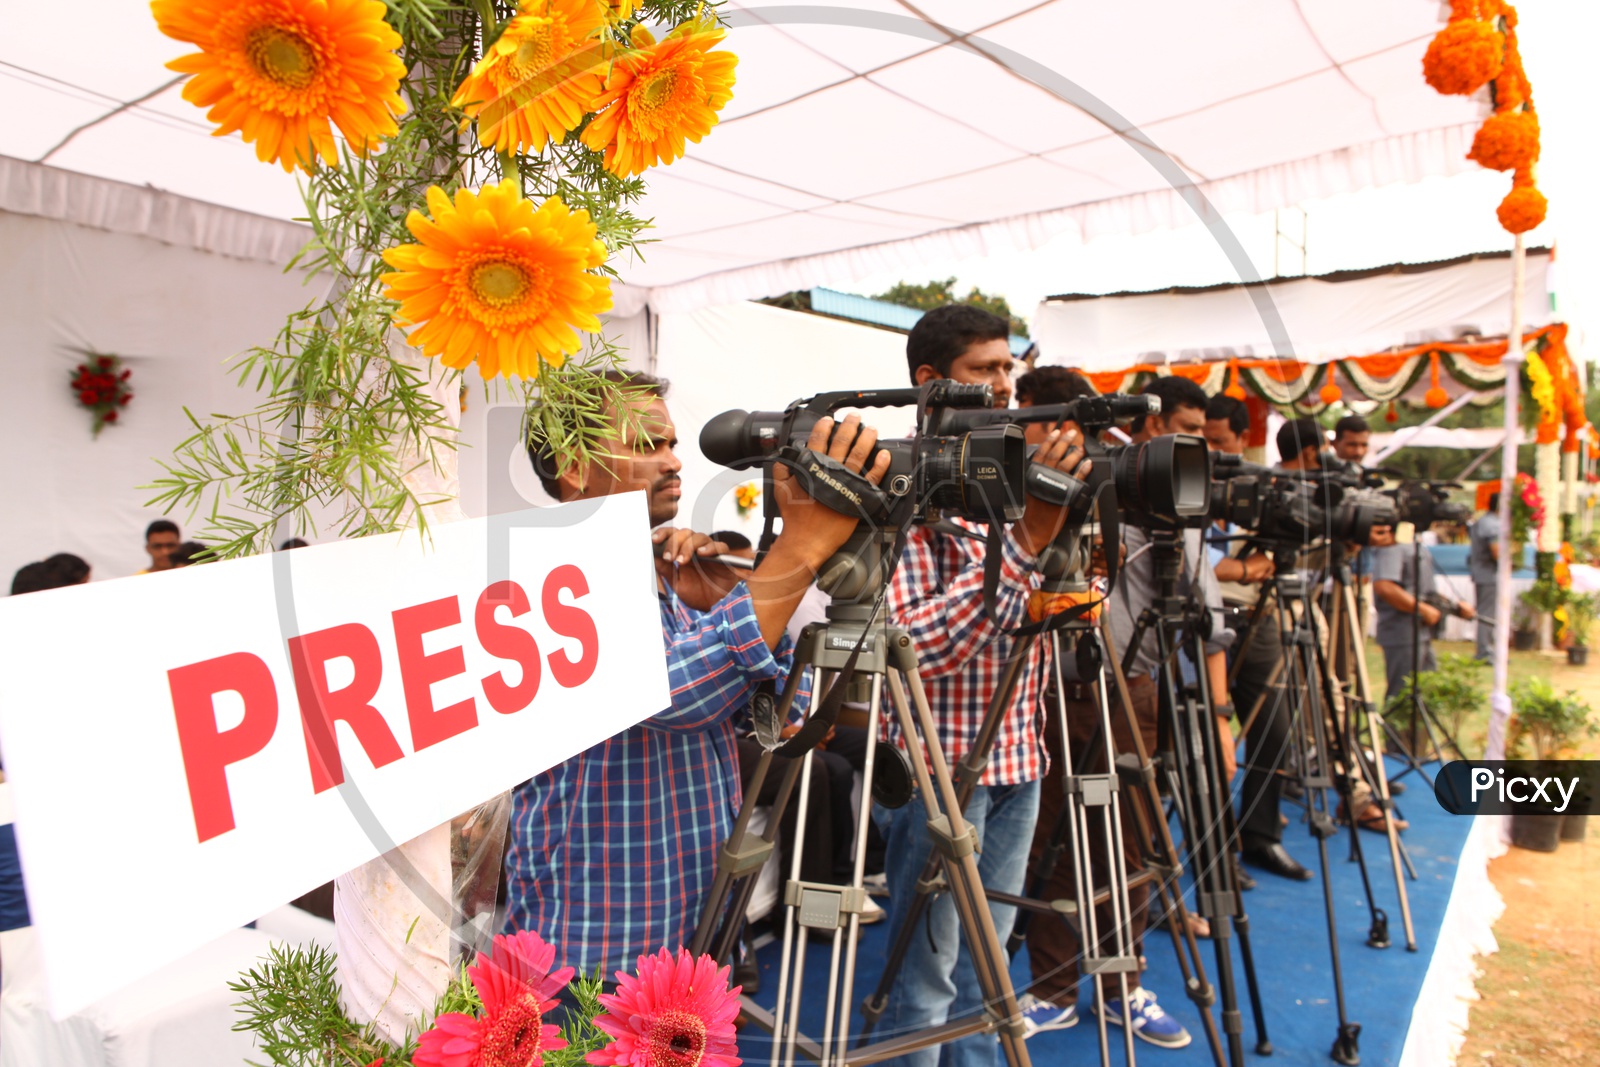 Press or Media Journalists, News Videographers